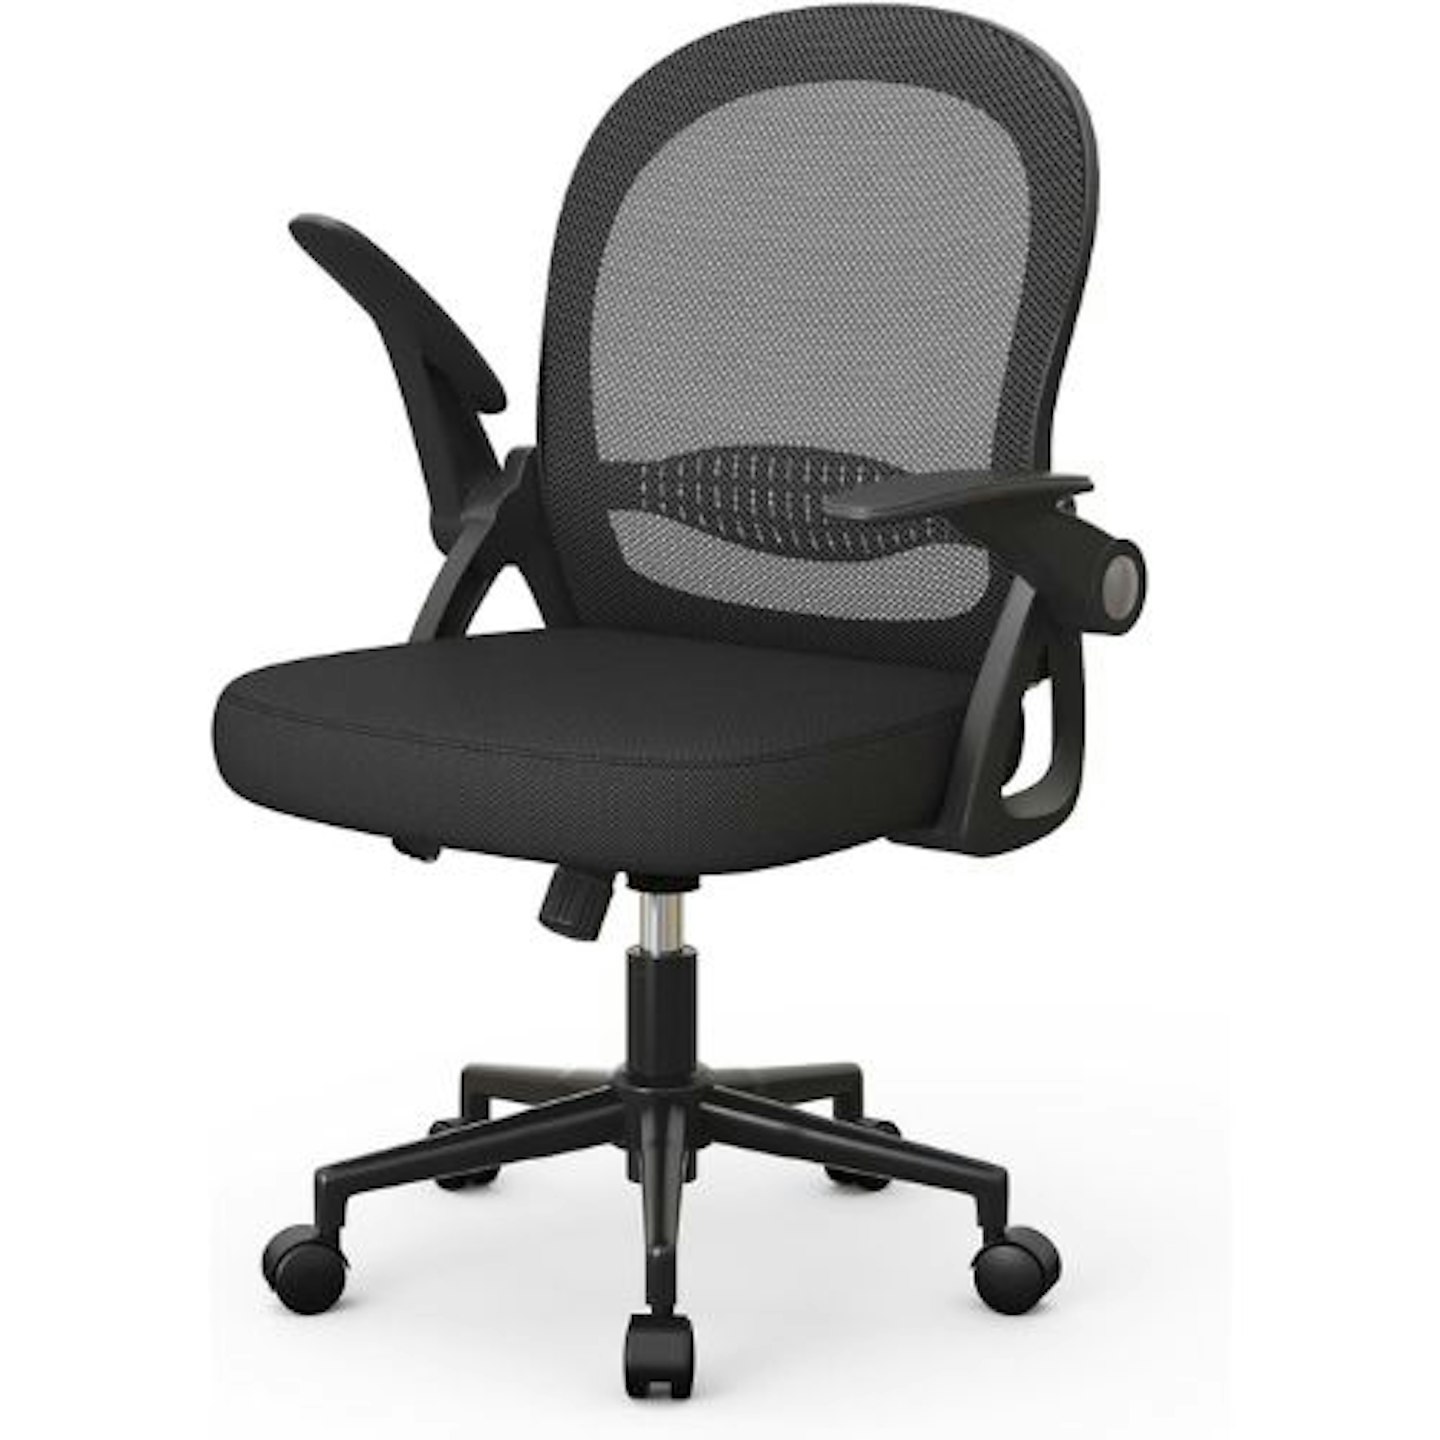 Naspaluro Home Office Chair